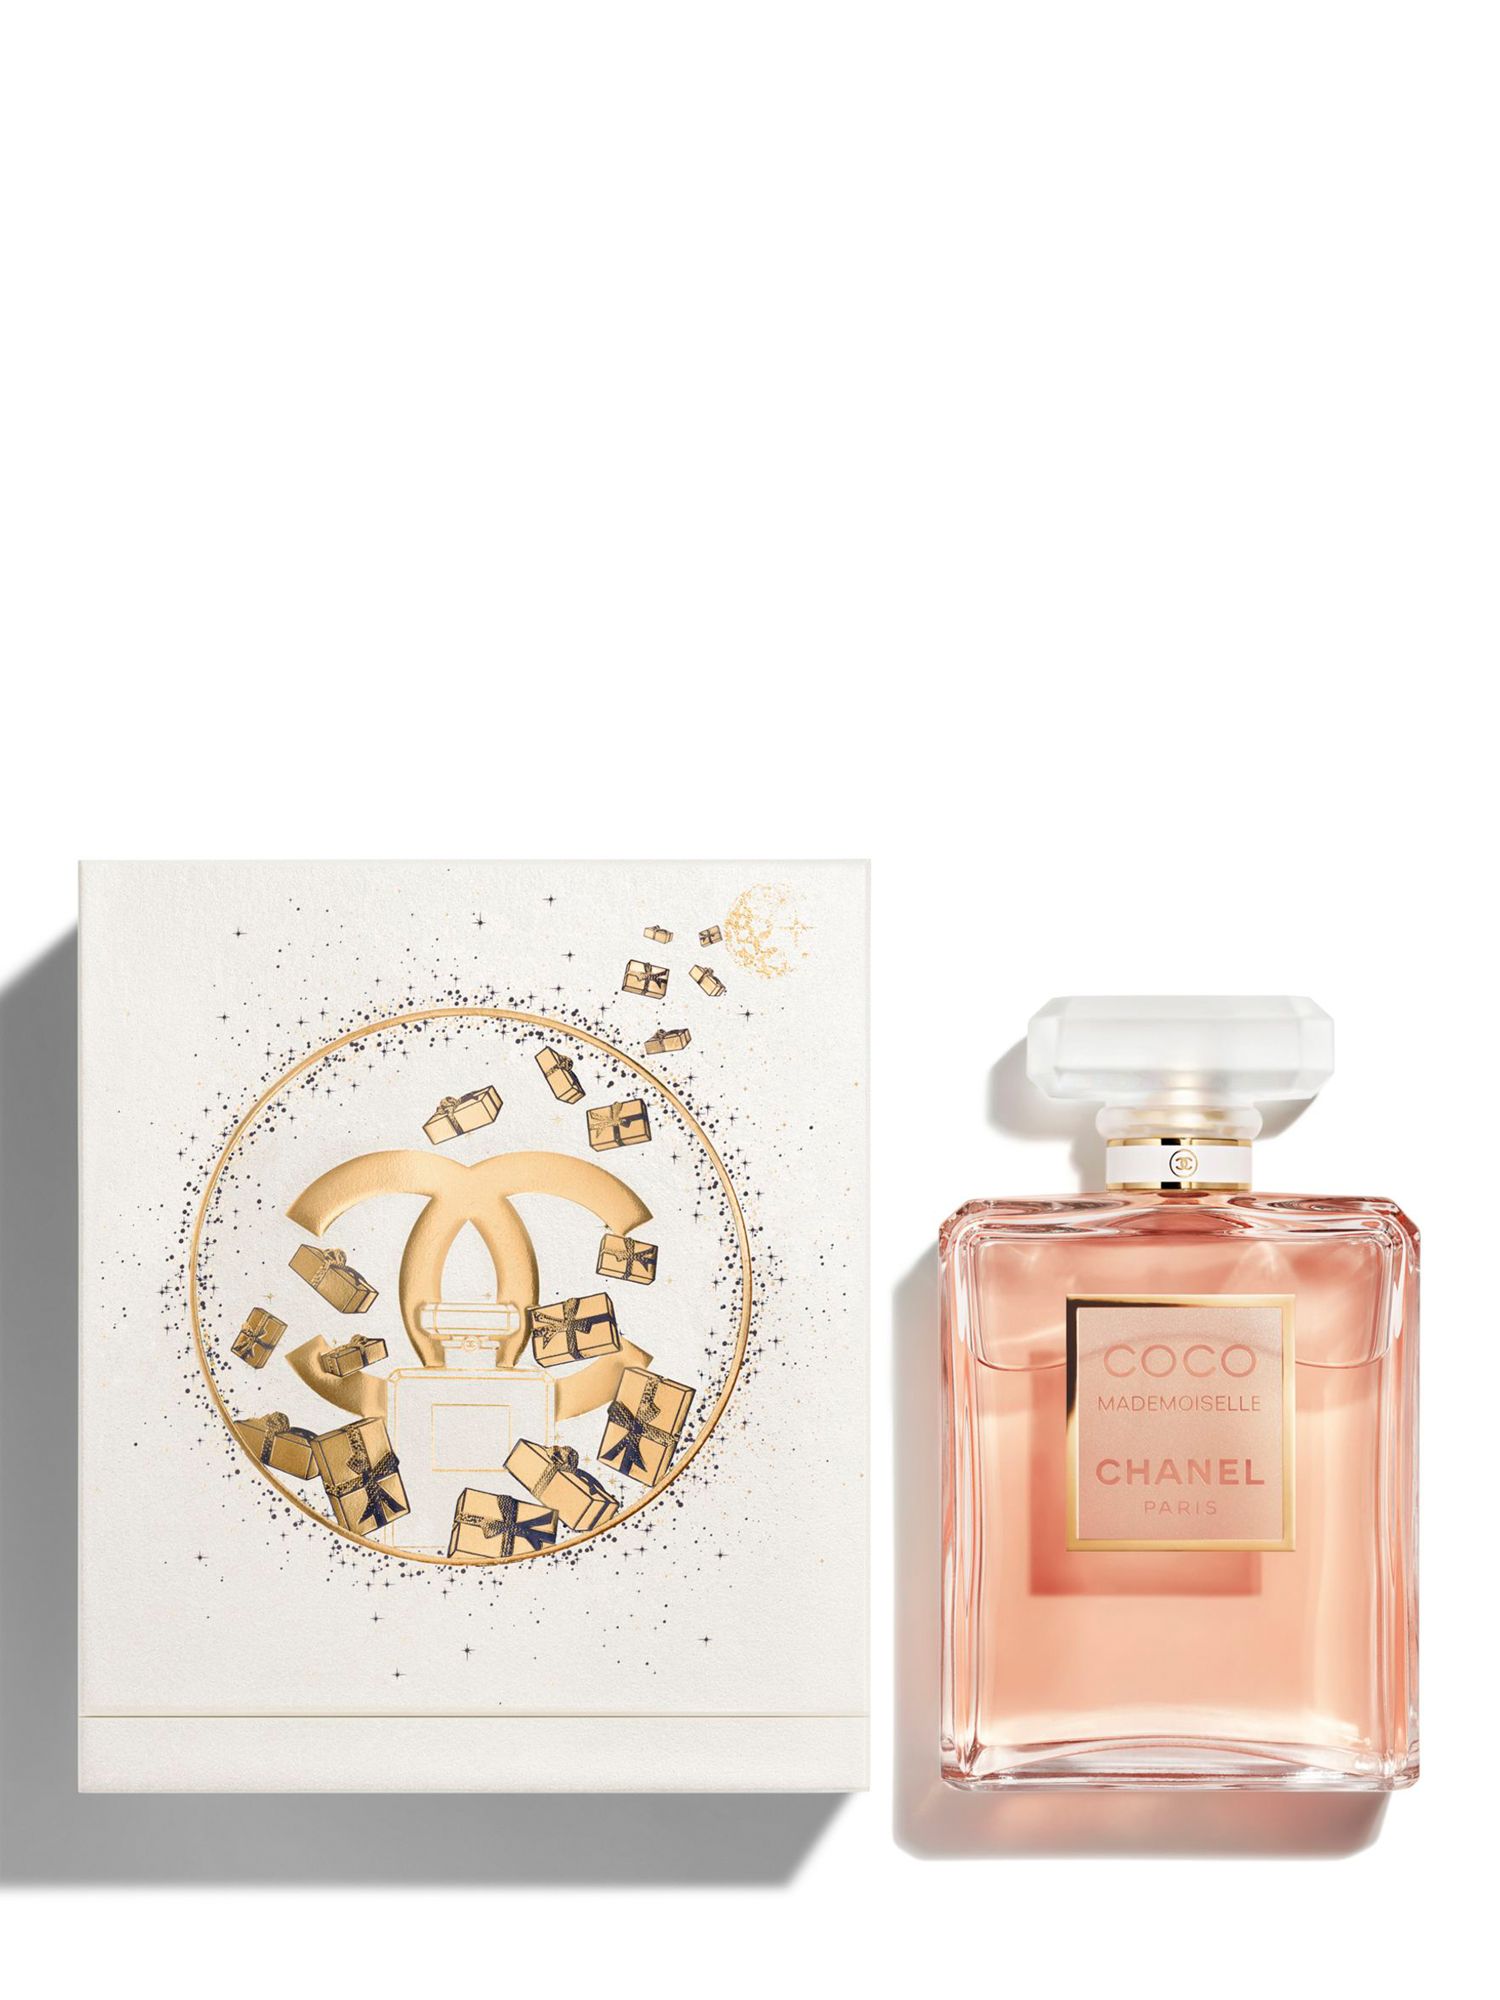 Pin by Tklin on Douglas parfum  Perfume, Perfume bottles, Bottle